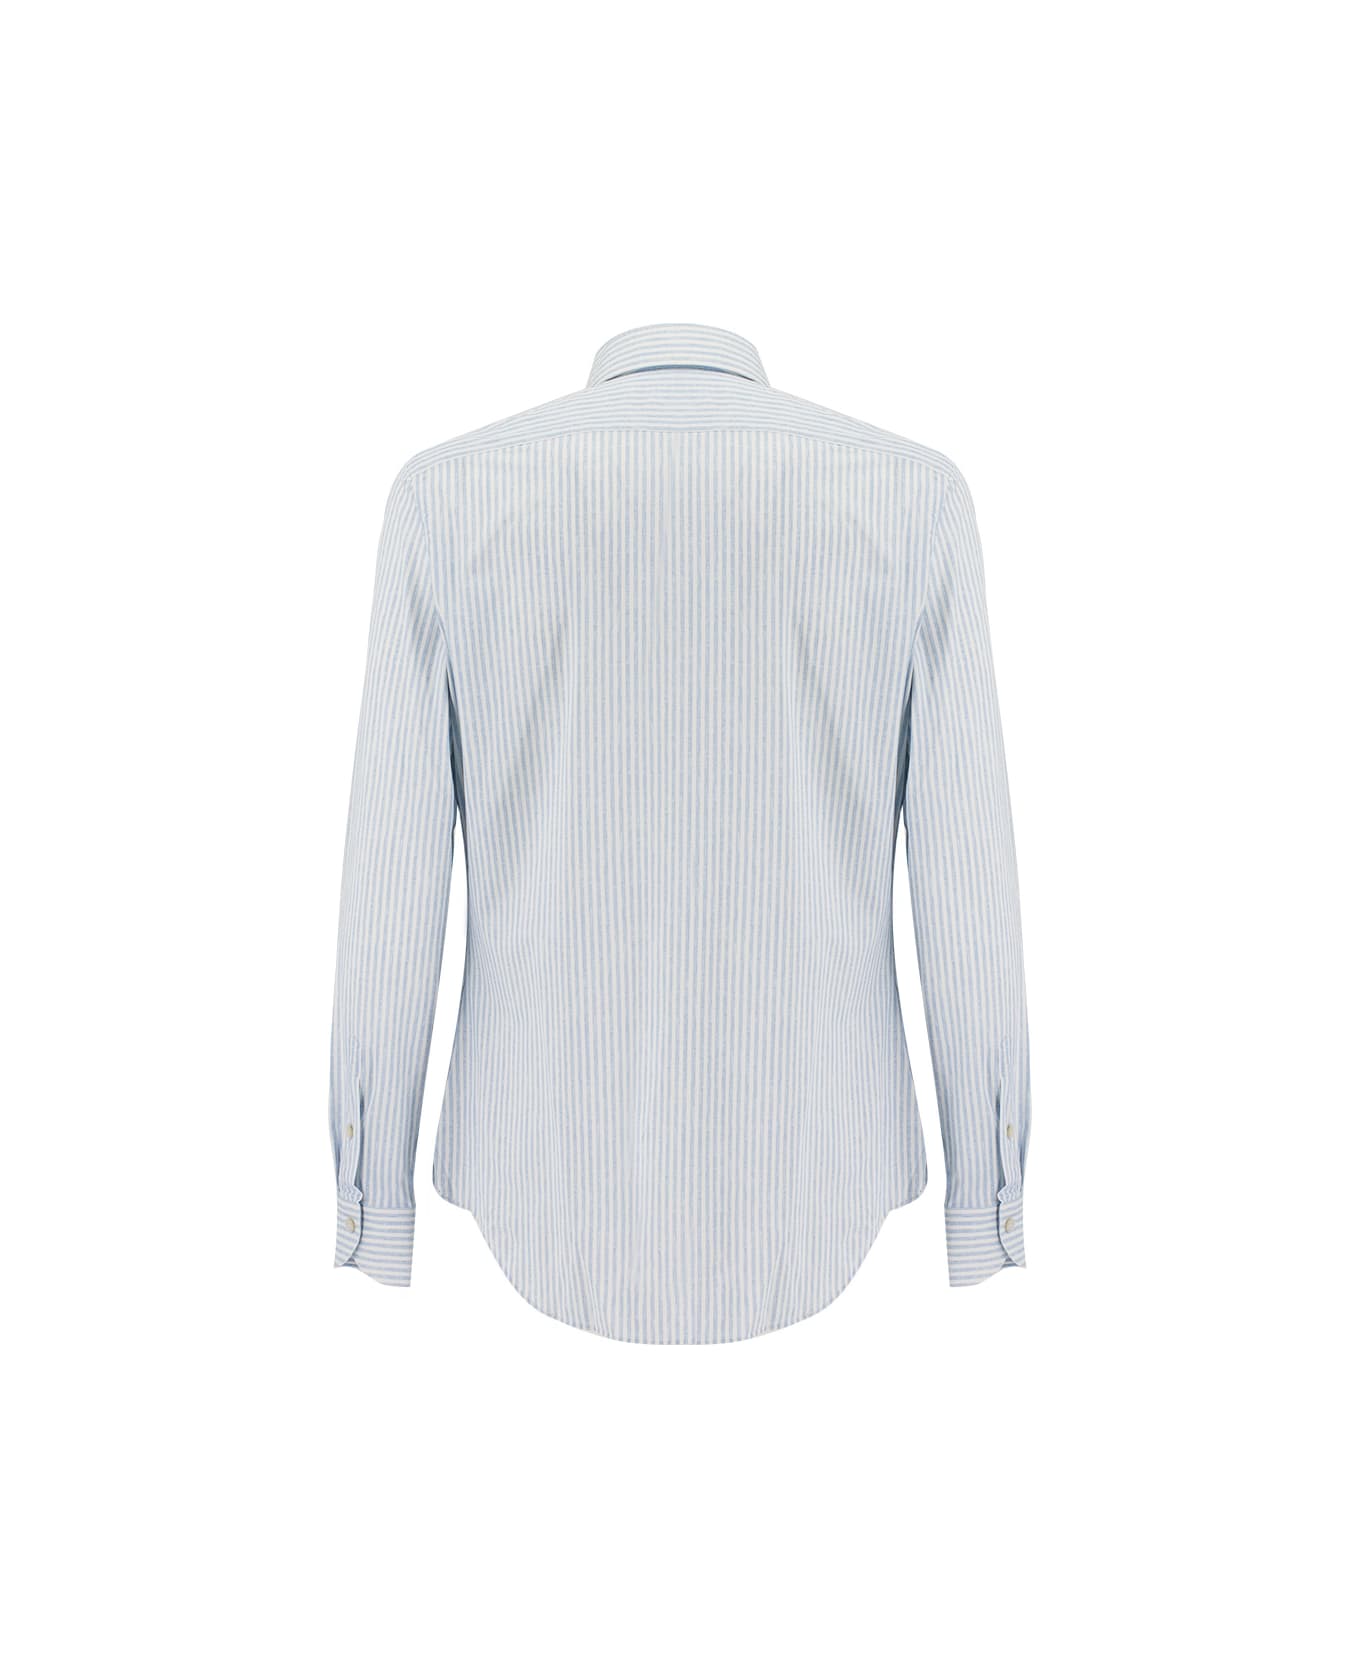 Xacus Shirt - STRIPE LIGHT BLUE+WHITE